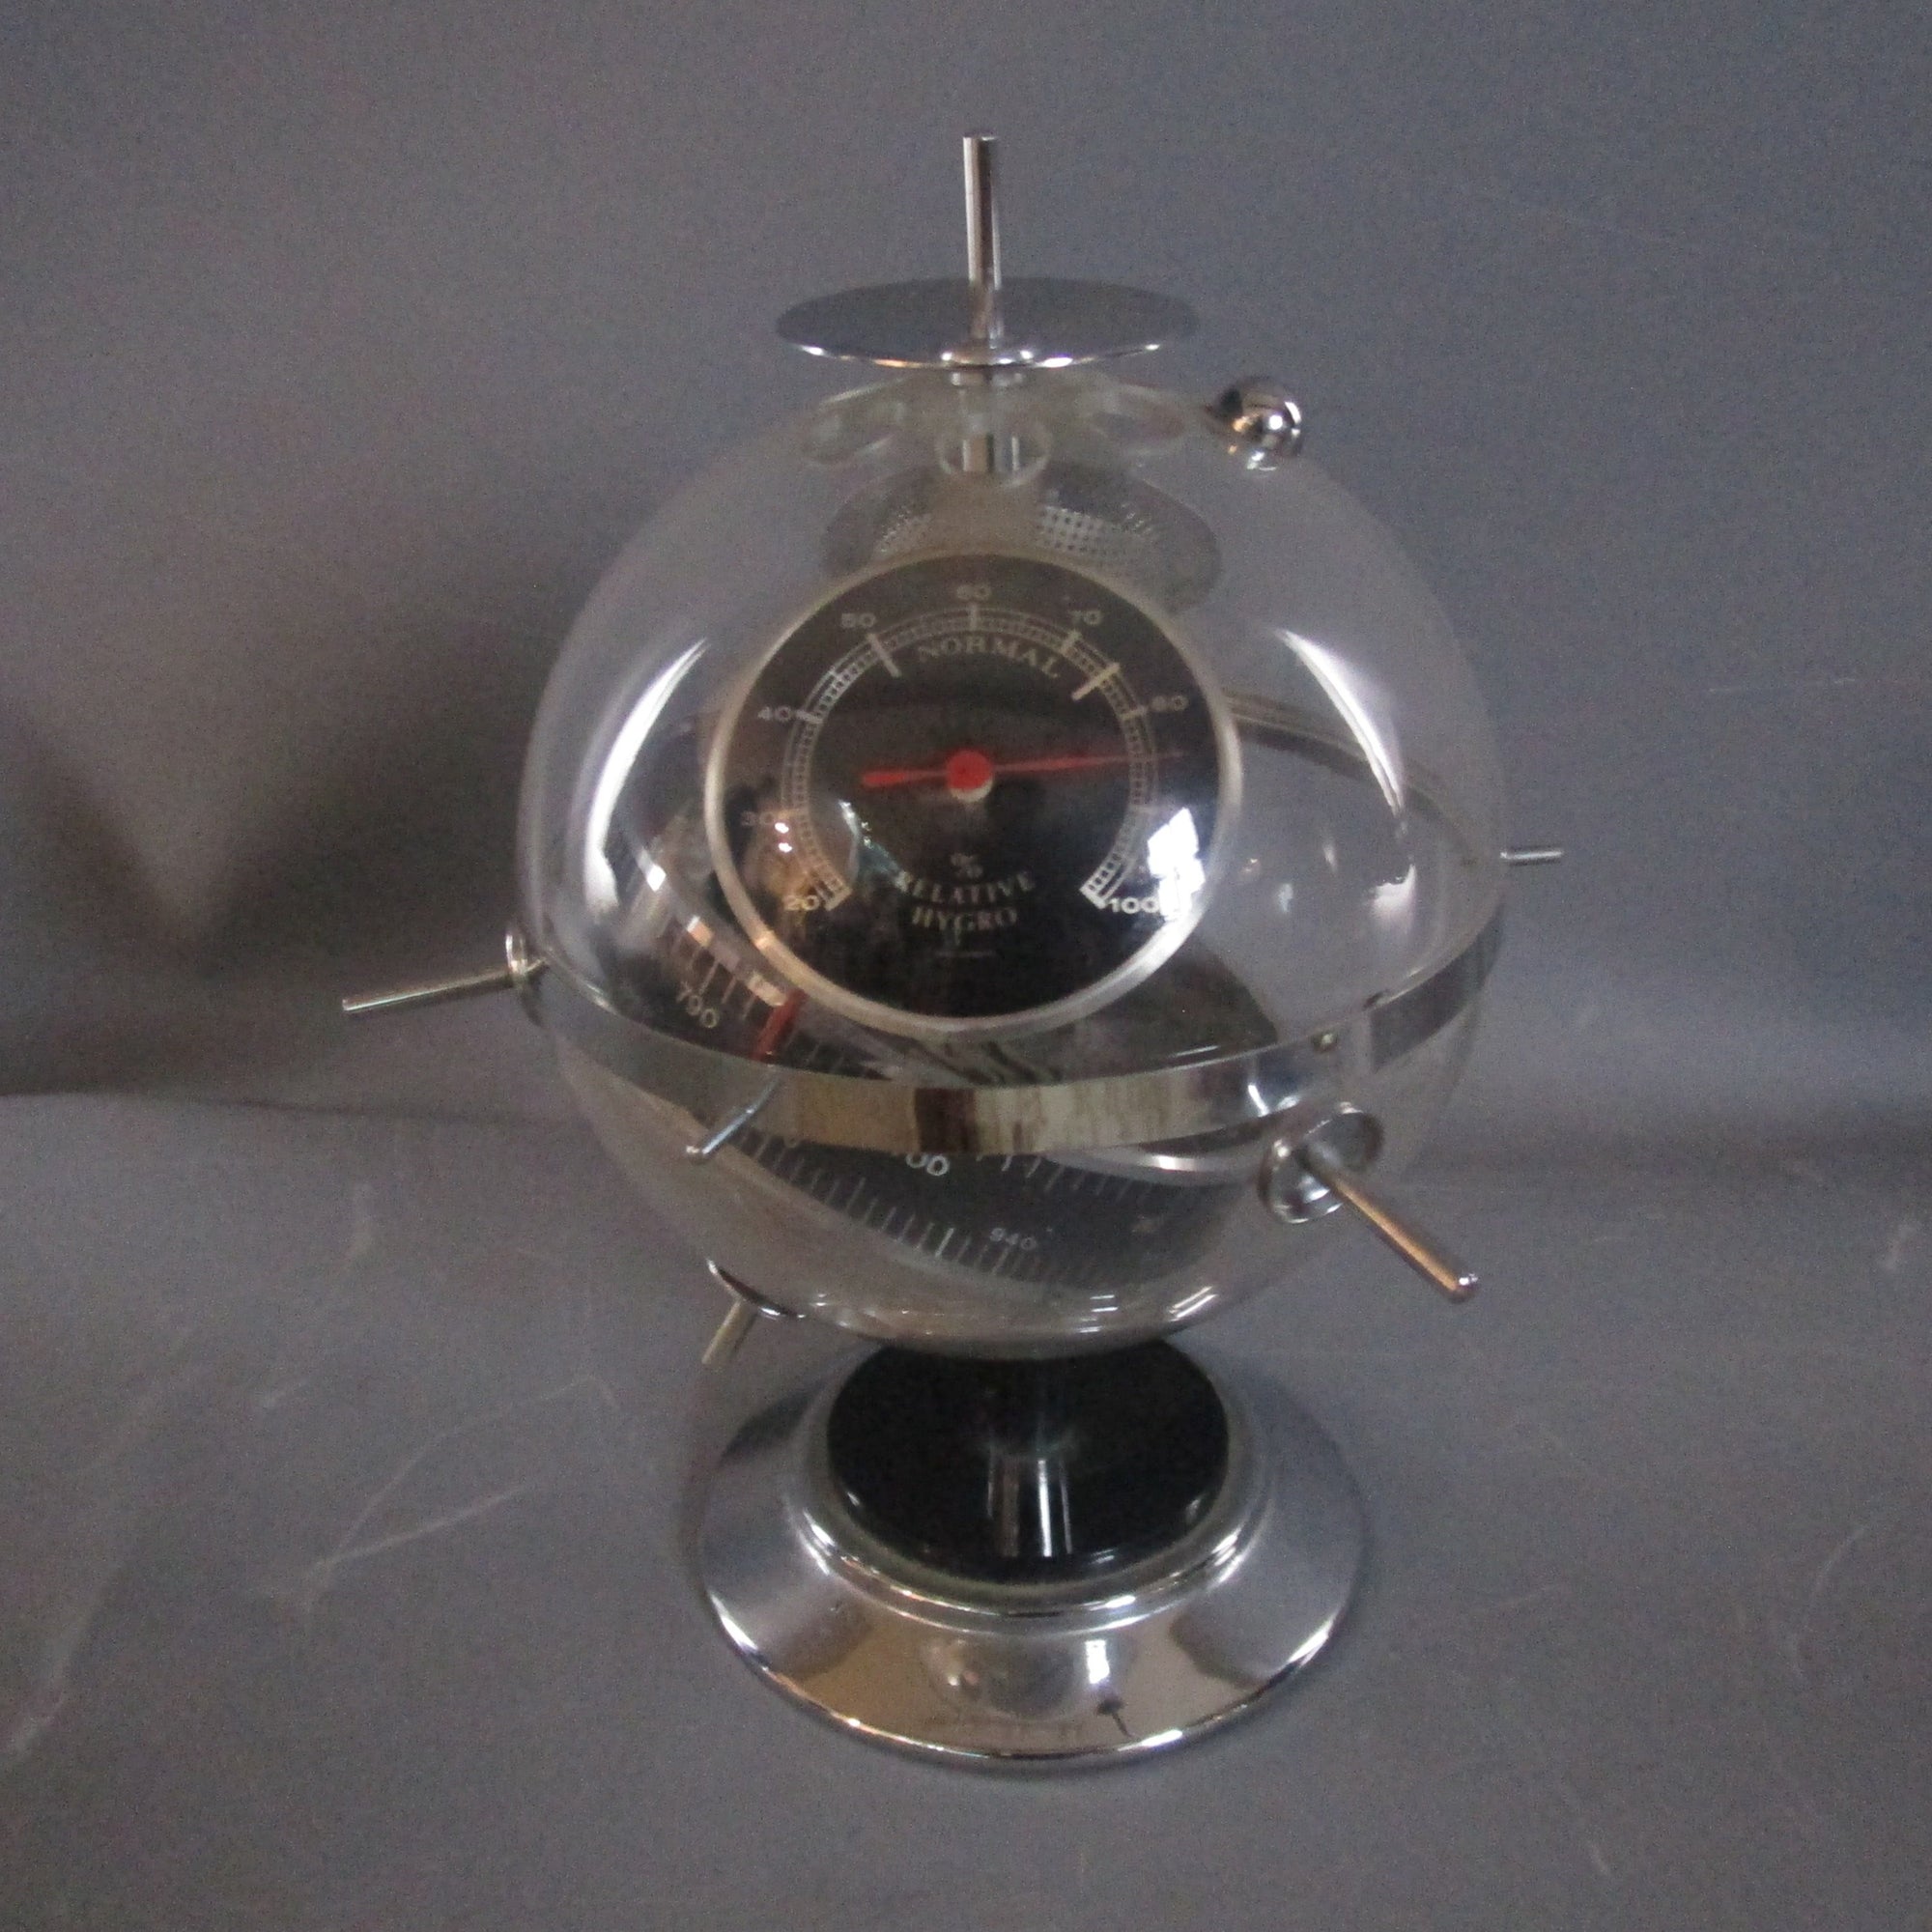 West German Sputnik Space Age Desktop Barometer Vintage Mid Century c1950